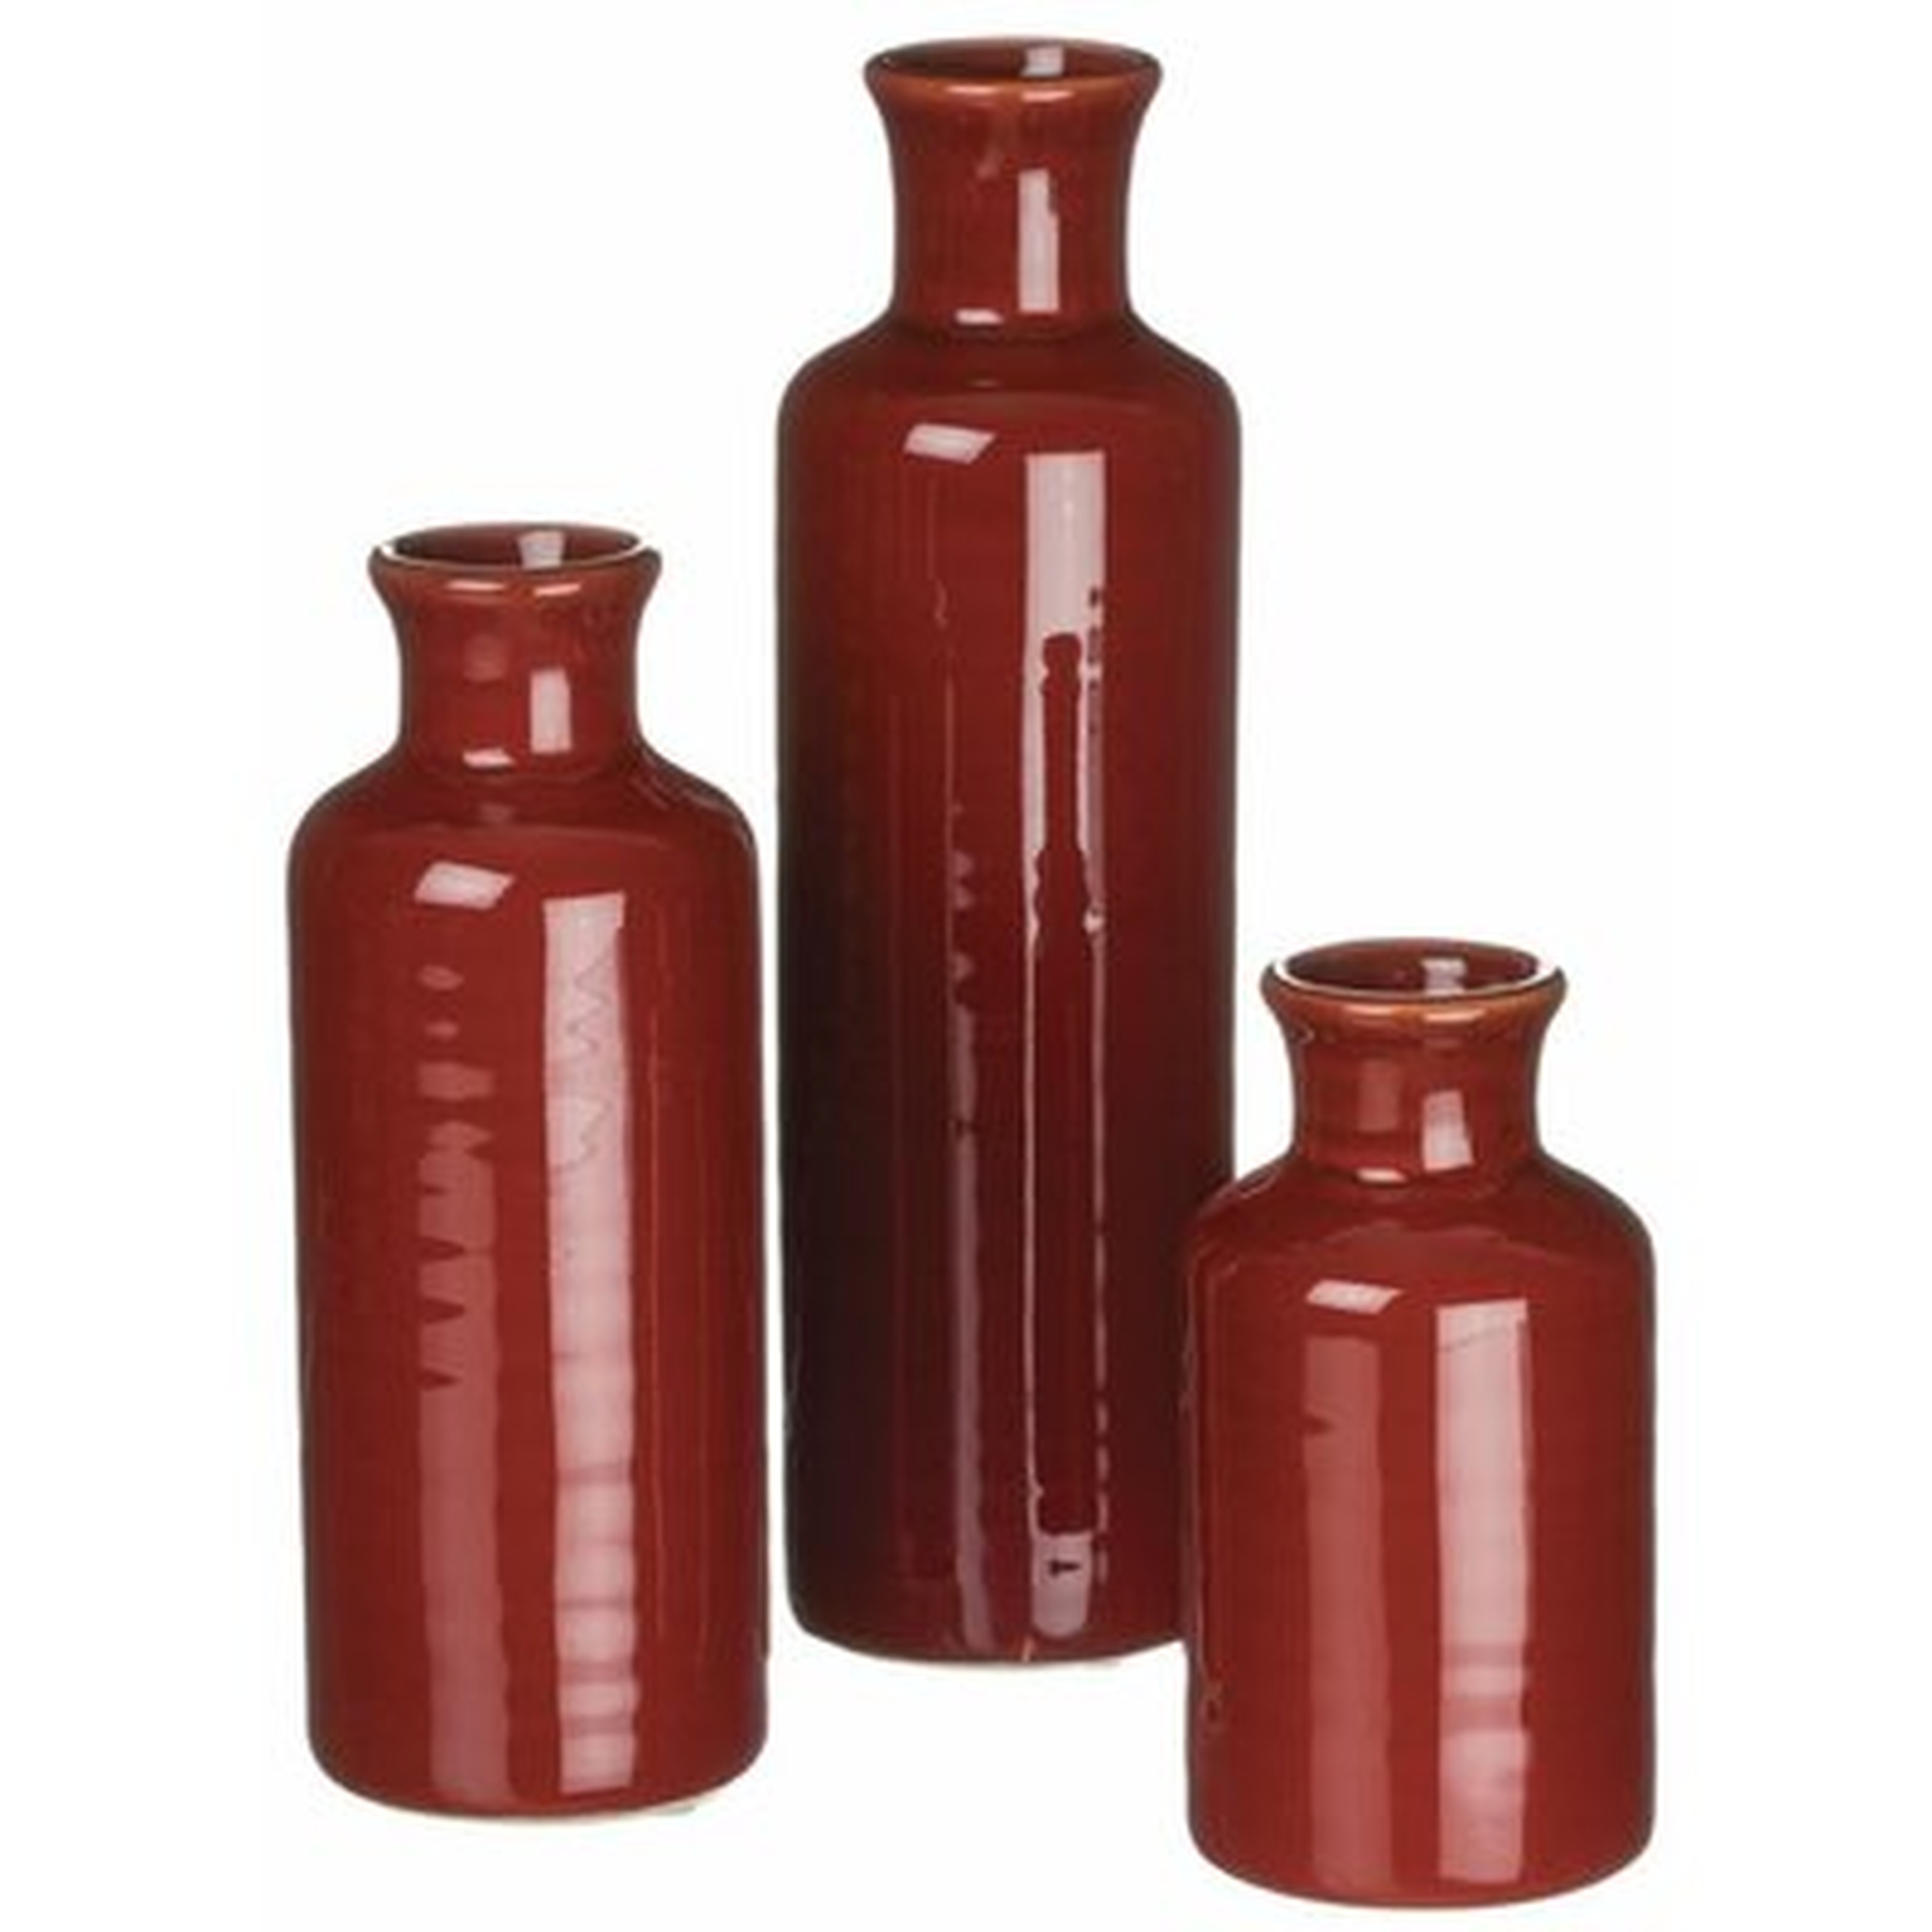 Remzi Bottle 3 Piece Table Vase Set - Wayfair